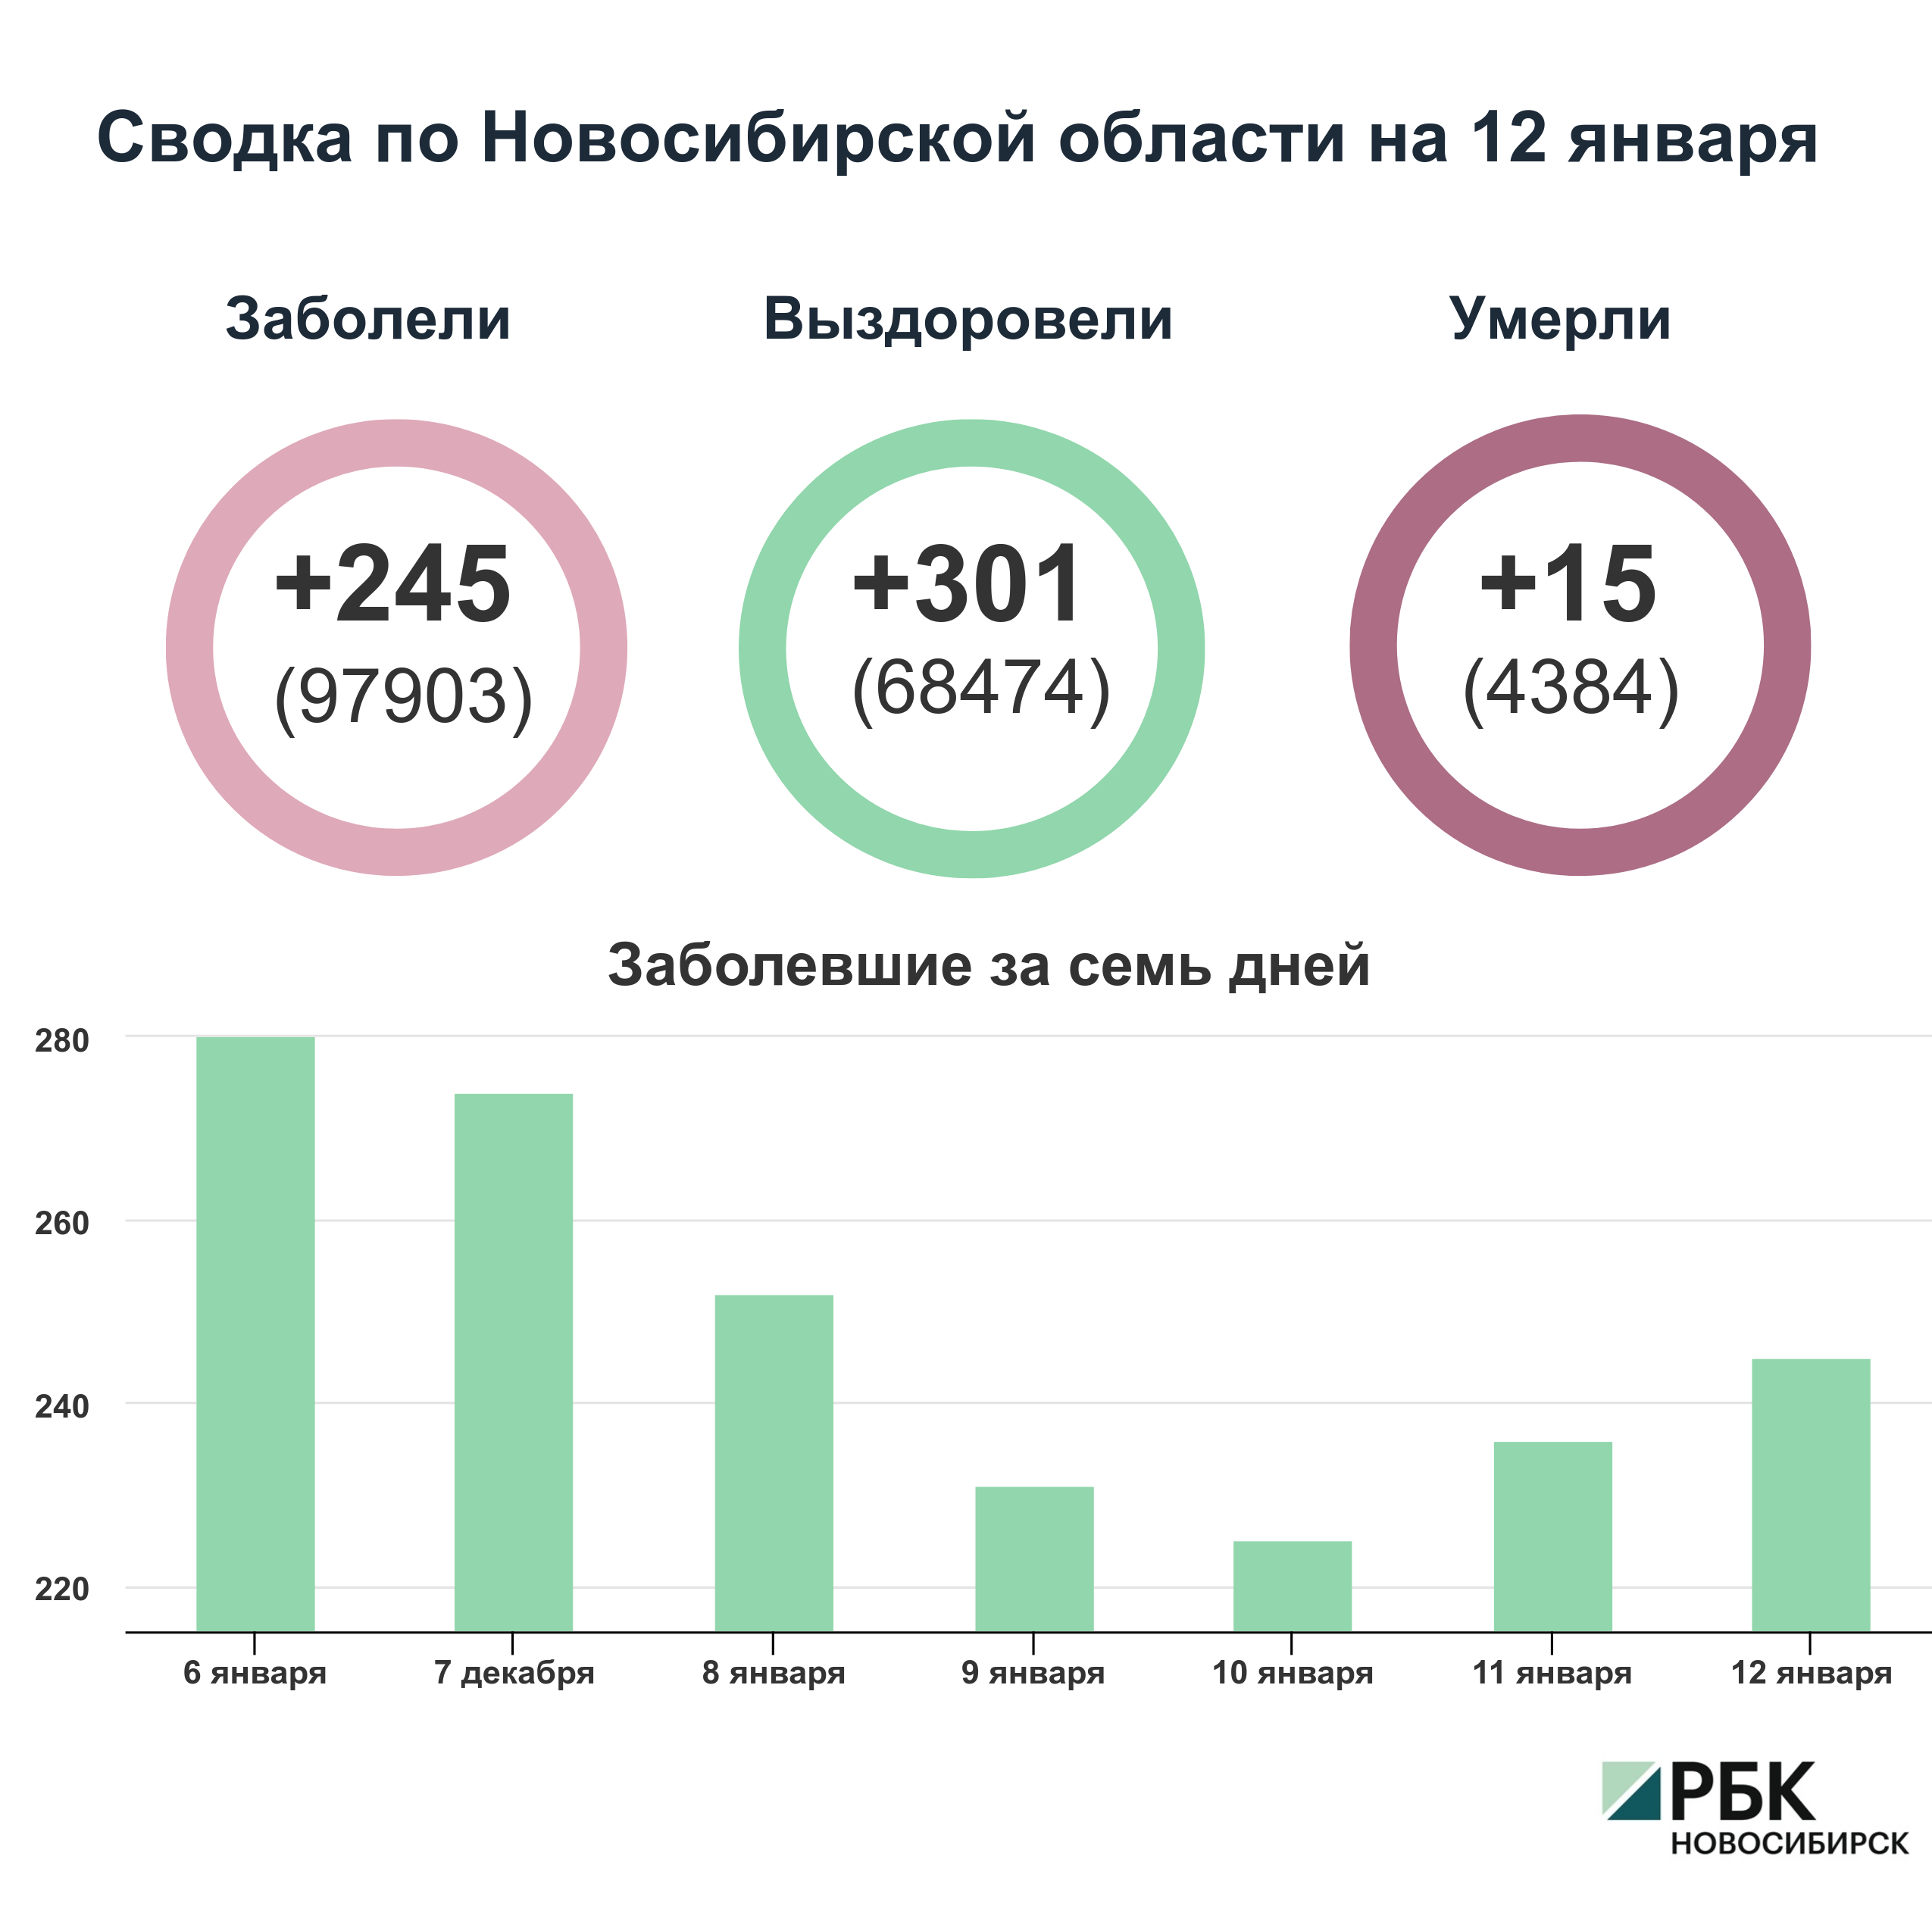 Коронавирус в Новосибирске: сводка на 12 января